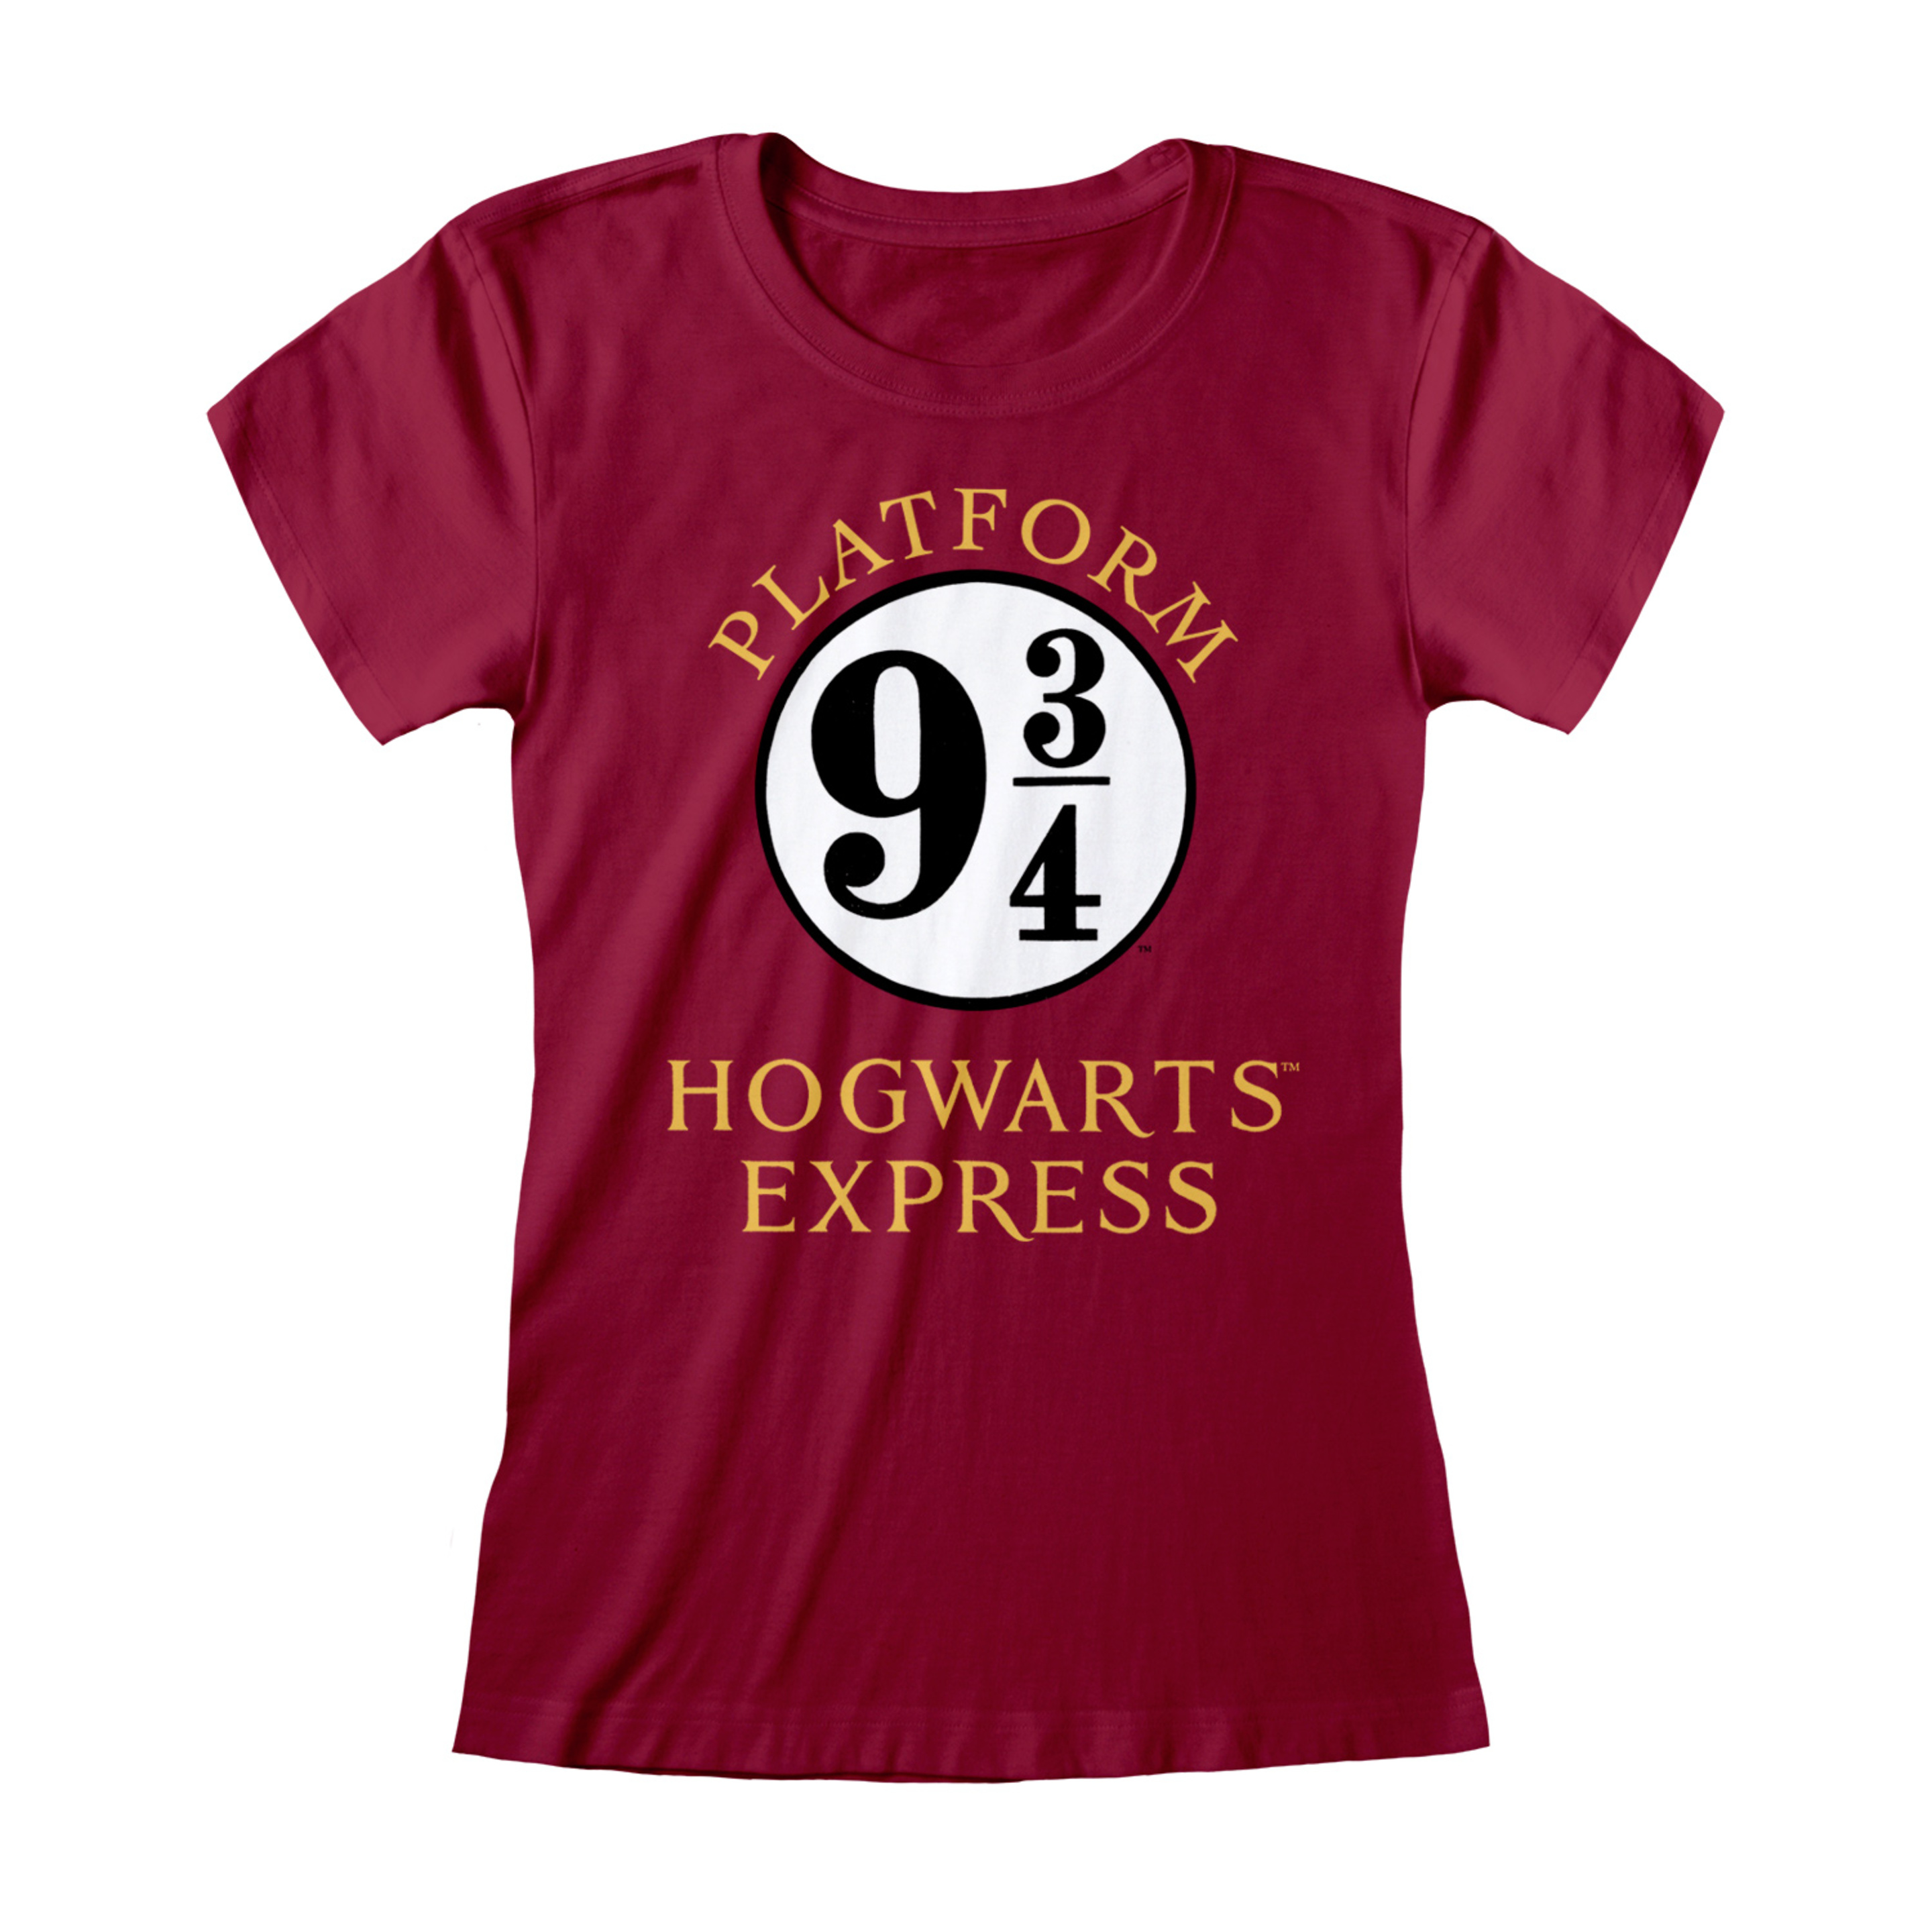 Camiseta De Hogwarts Harry Potter